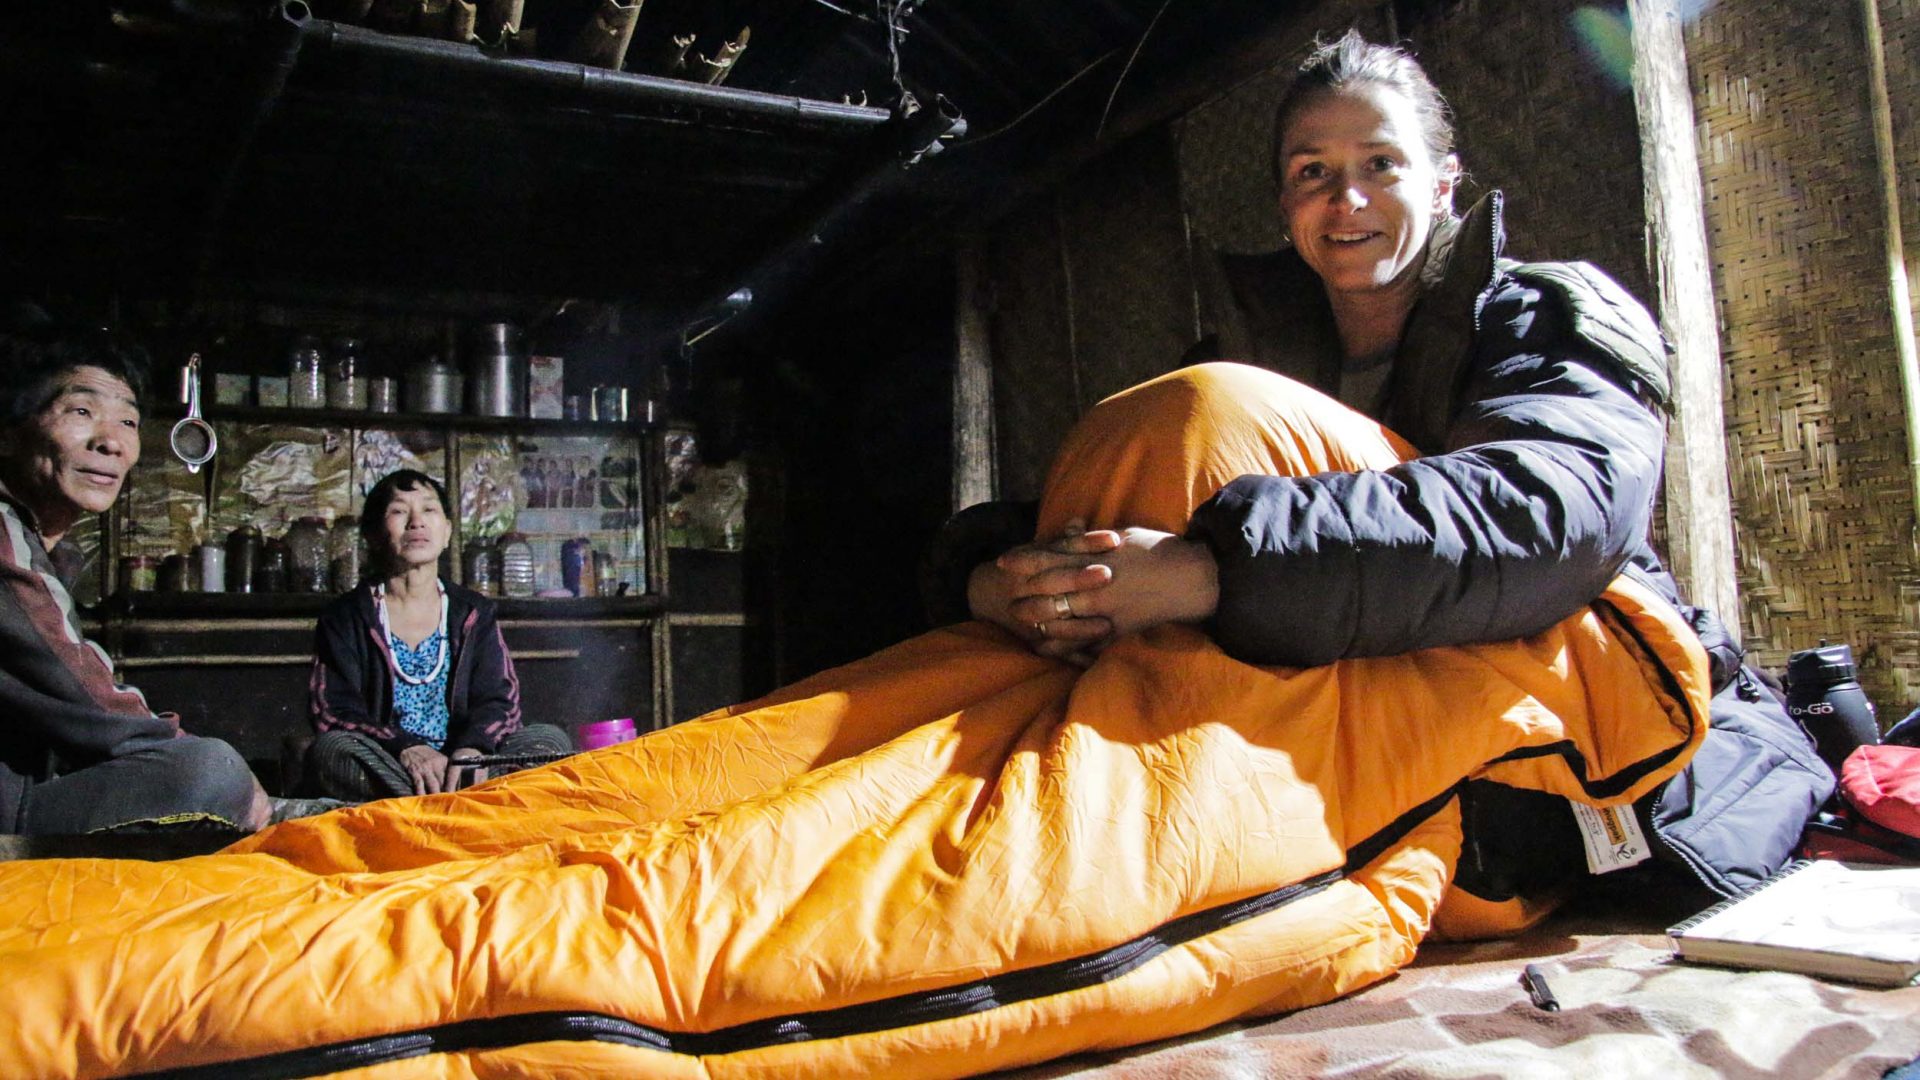 Bedding down for the night in the Mathun Valley, Arunachal Pradesh, northeastern India.